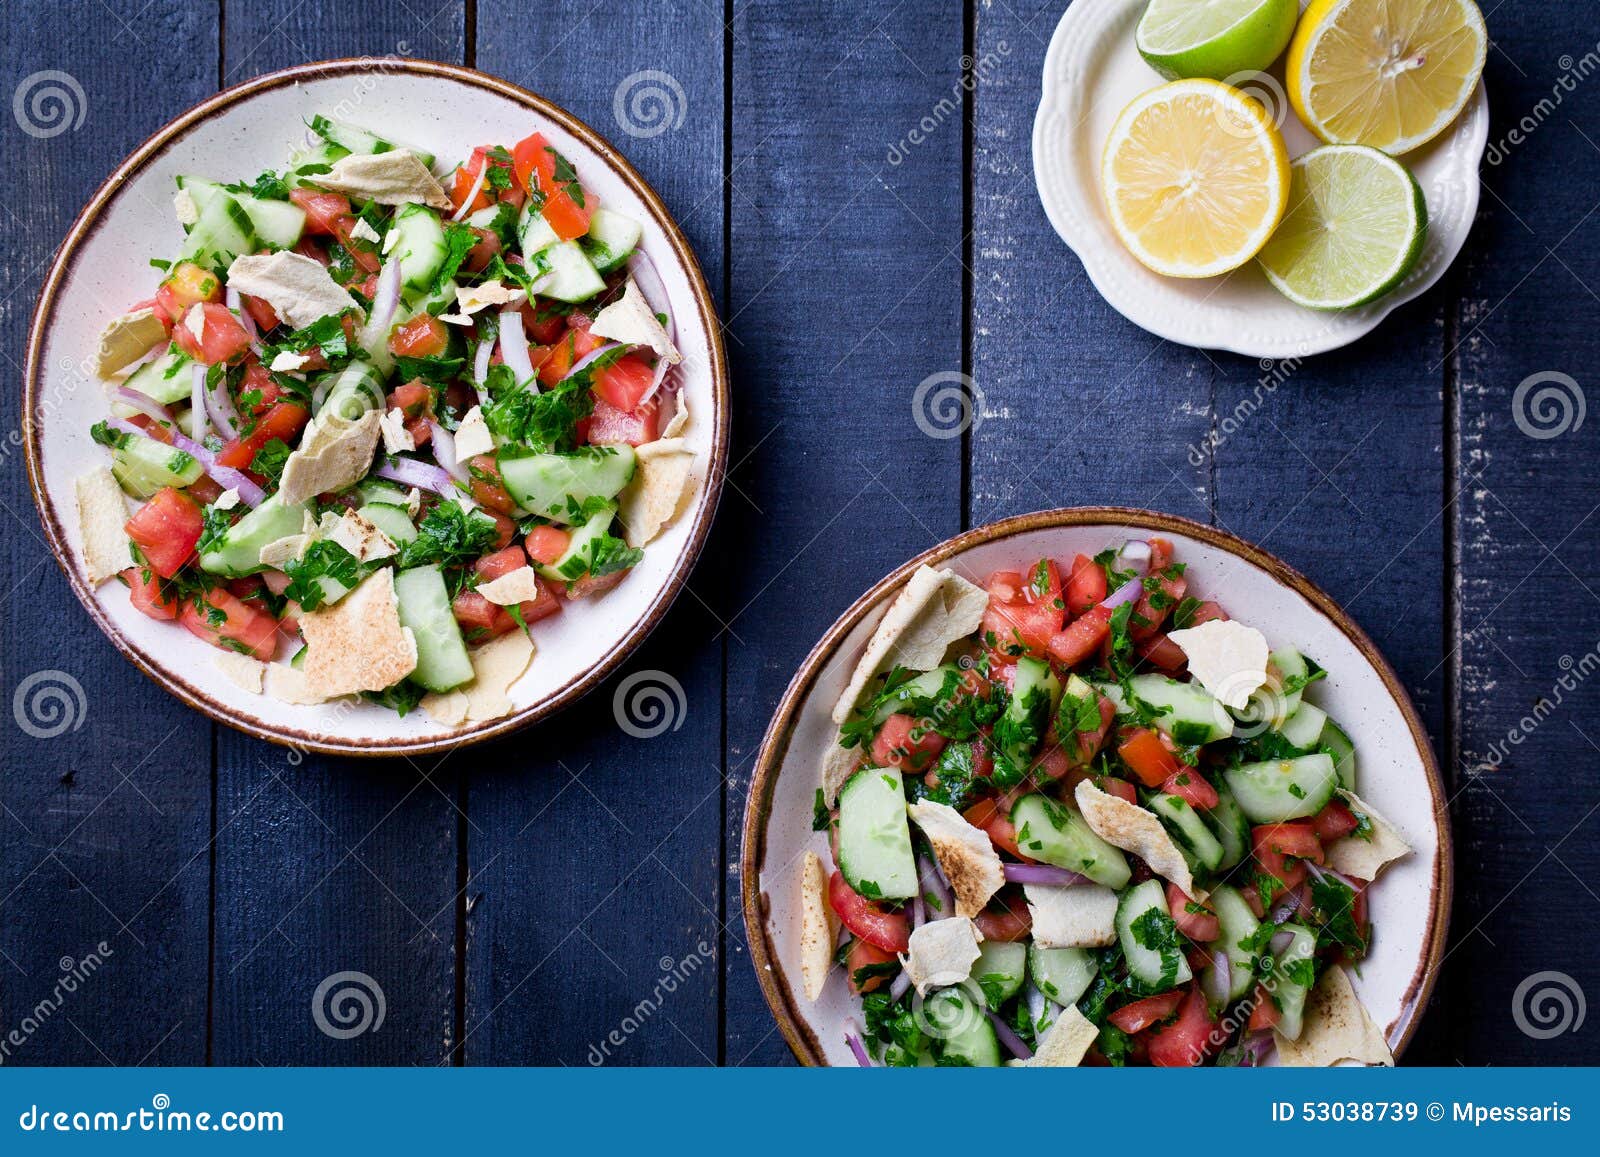 Libanesischer Salat Fattoush Stockbild - Bild von kräuter, vegetarier ...